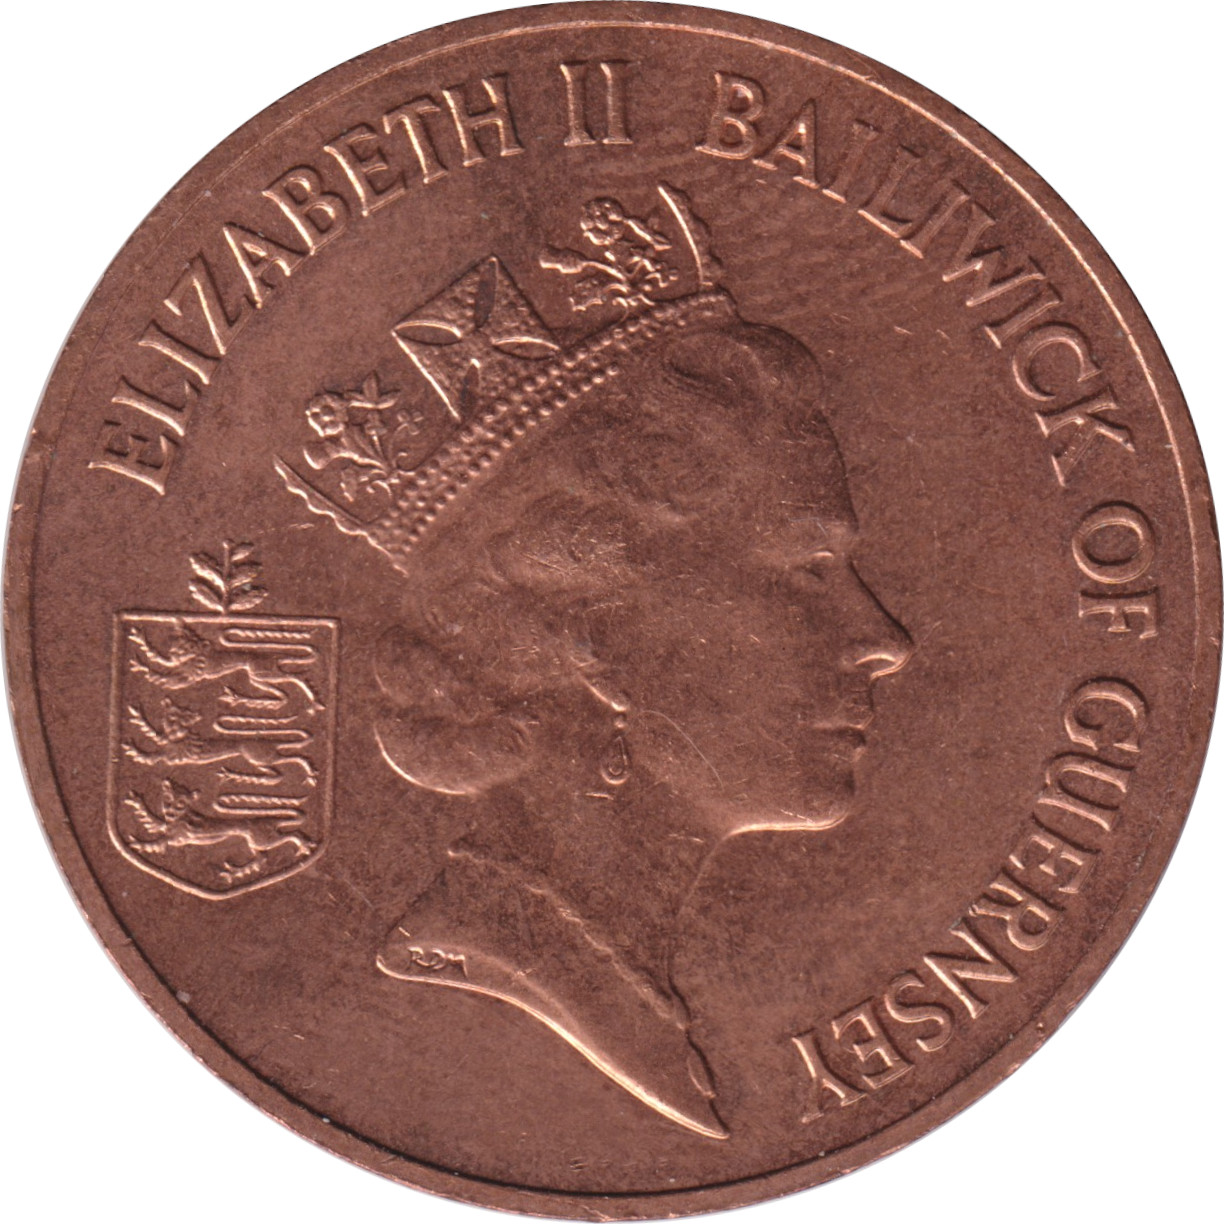 2 pence - Elizabeth II - Tête mature